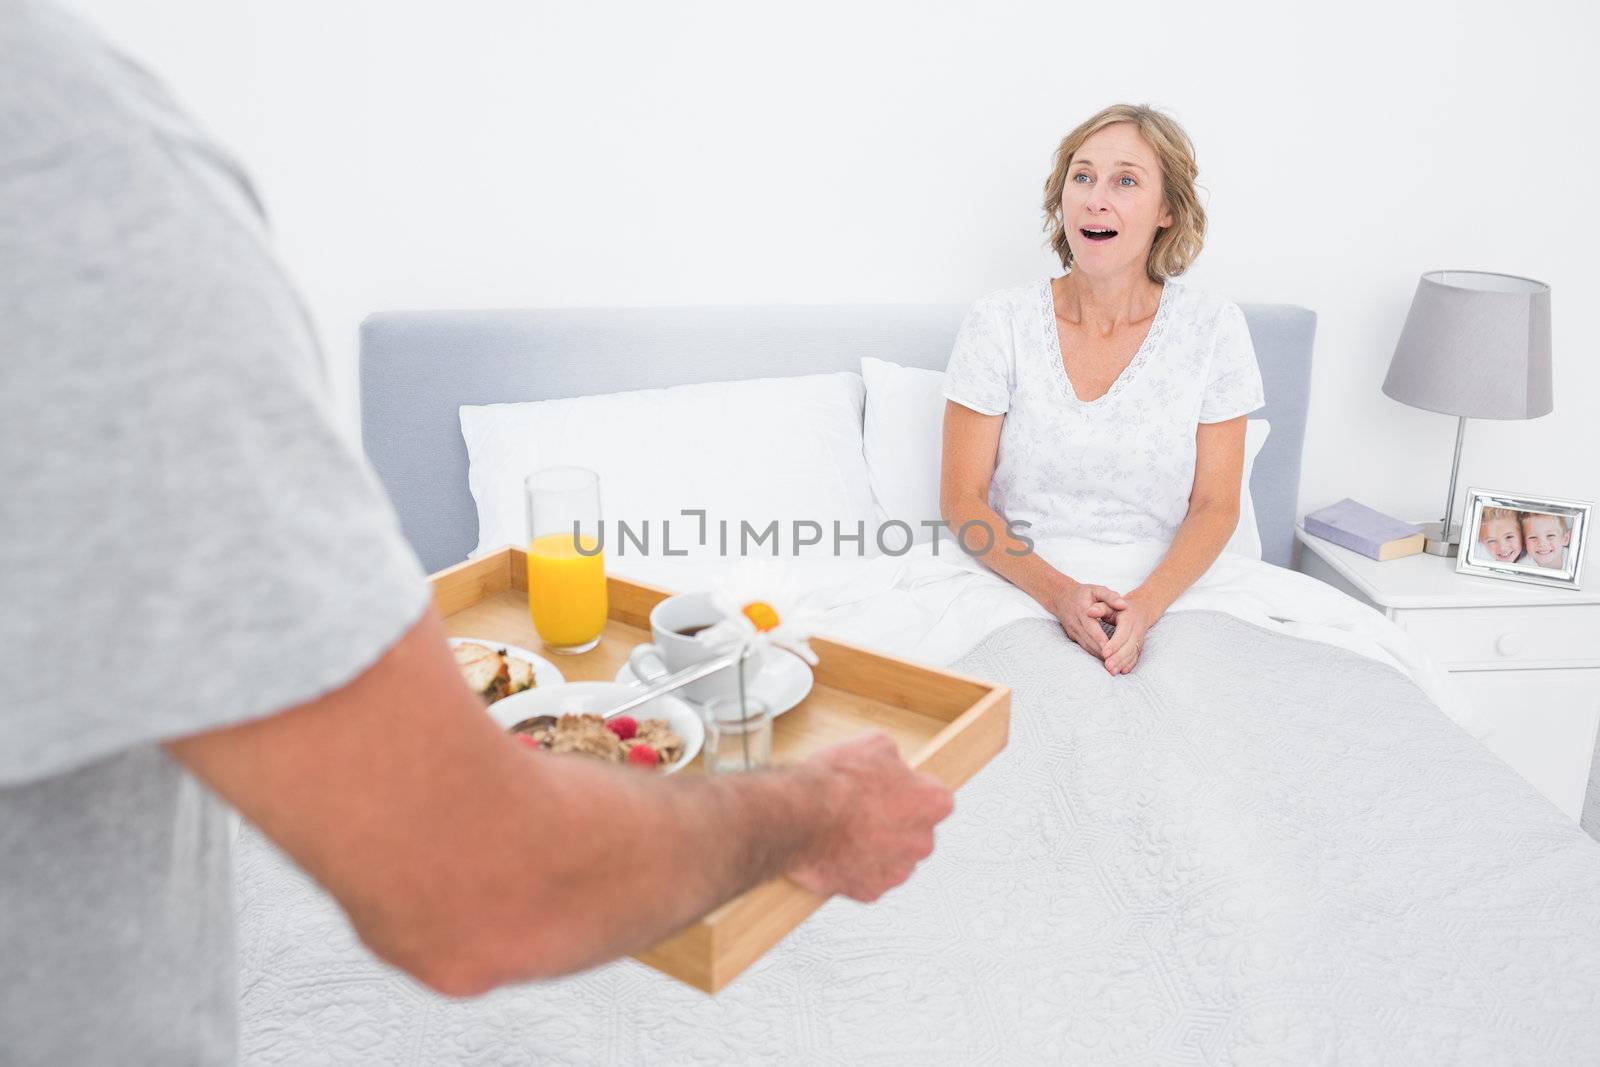 Husband bringing breakfast in bed to surprised wife by Wavebreakmedia